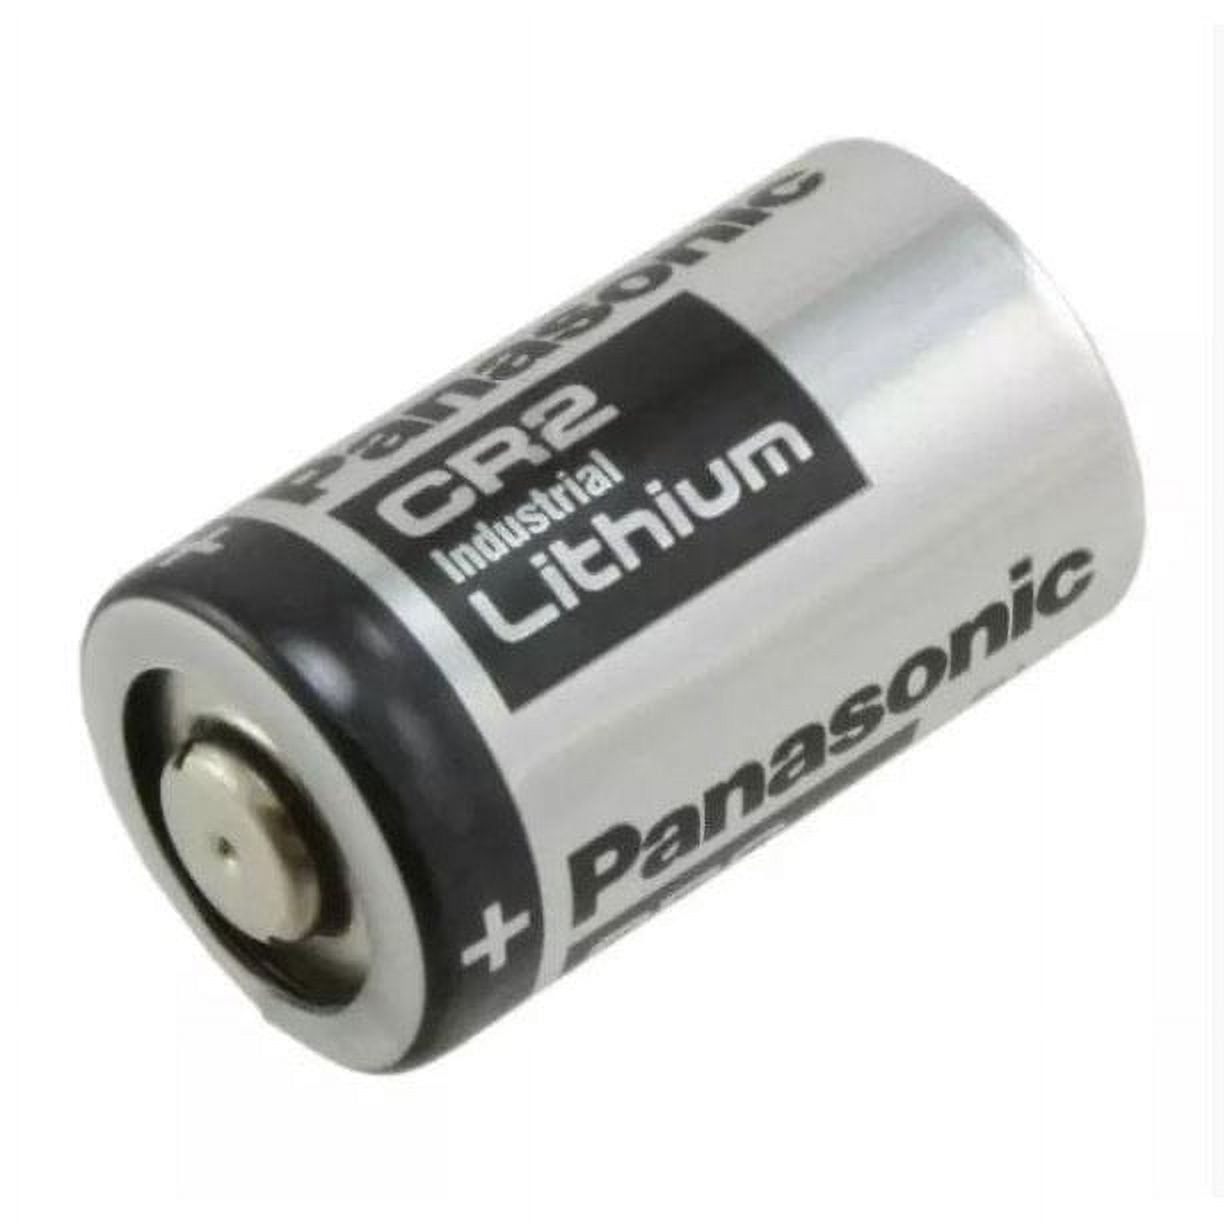 Pile au lithium 3V Panasonic - CR2